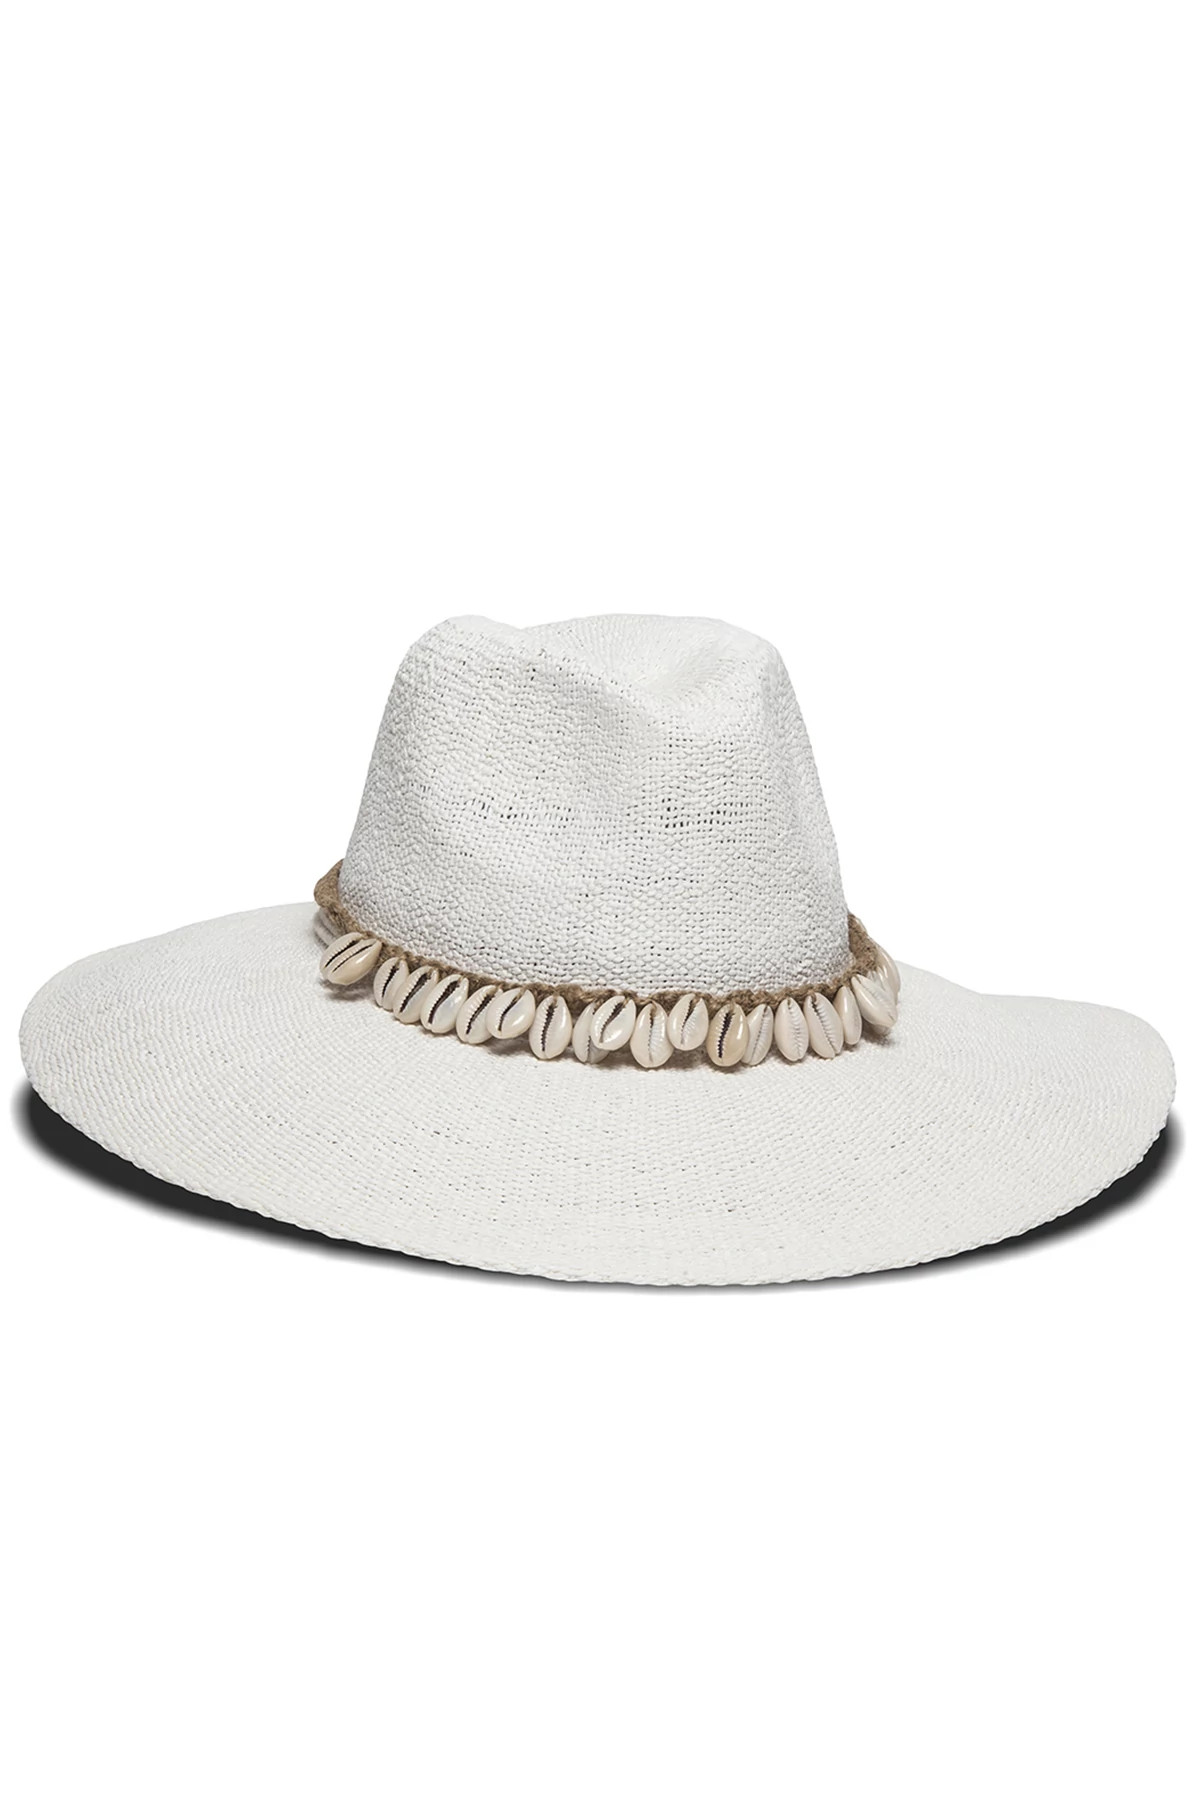 WHITE Barbados Puka Shell Trim Sun Hat image number 1